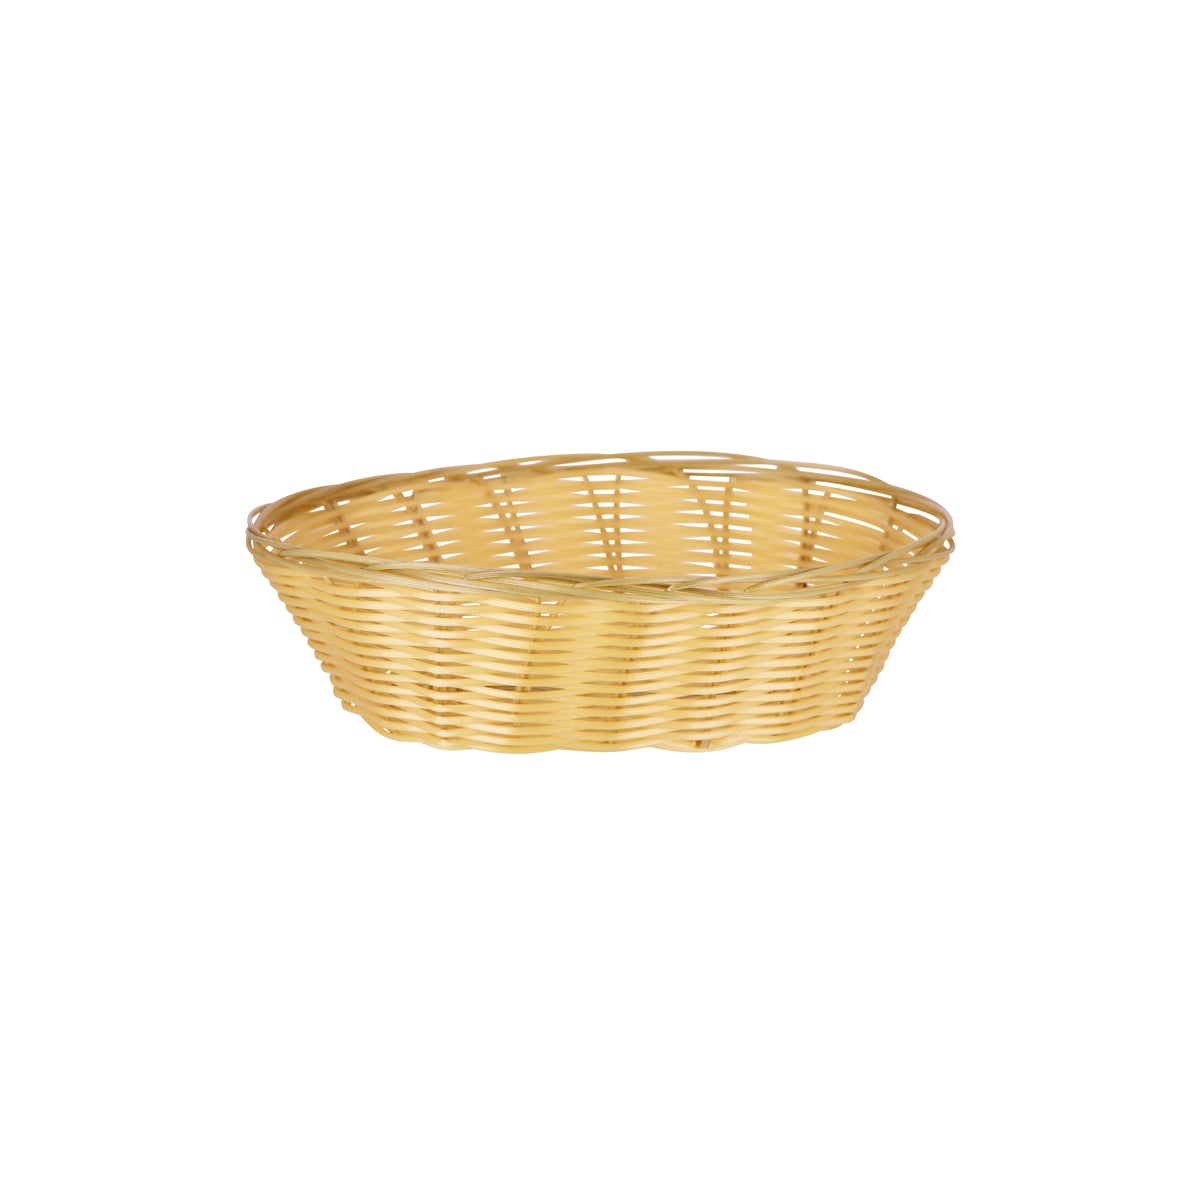 '04599 Chef Inox Bread Basket Oval Polypropylene 241x165x70mm Tomkin Australia Hospitality Supplies